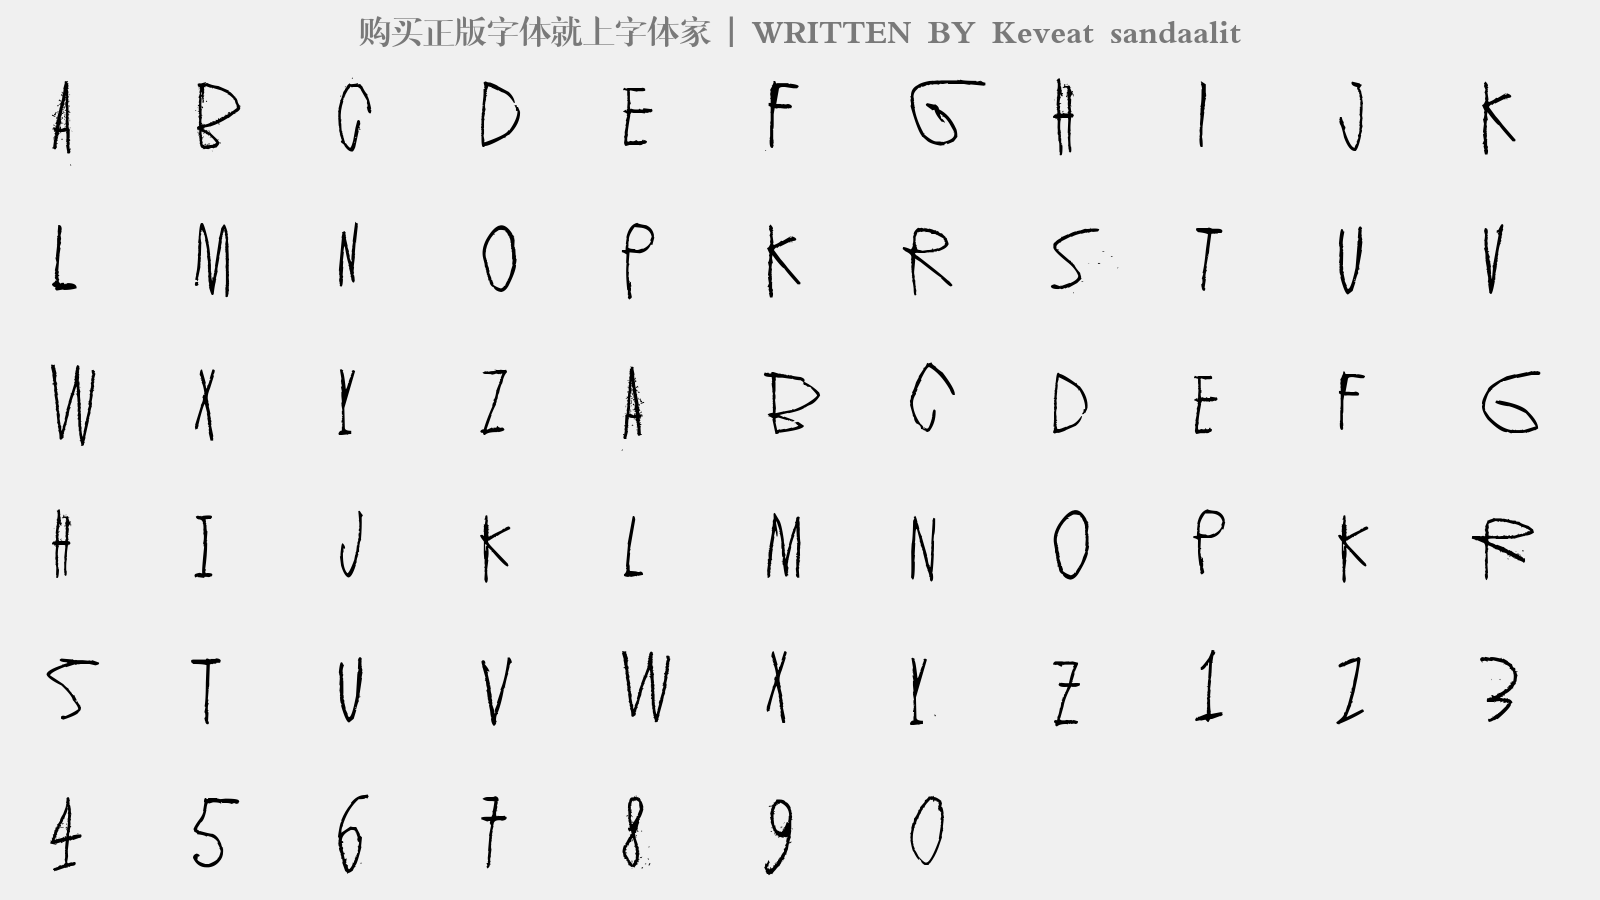 Keveat sandaalit - 大写字母/小写字母/数字